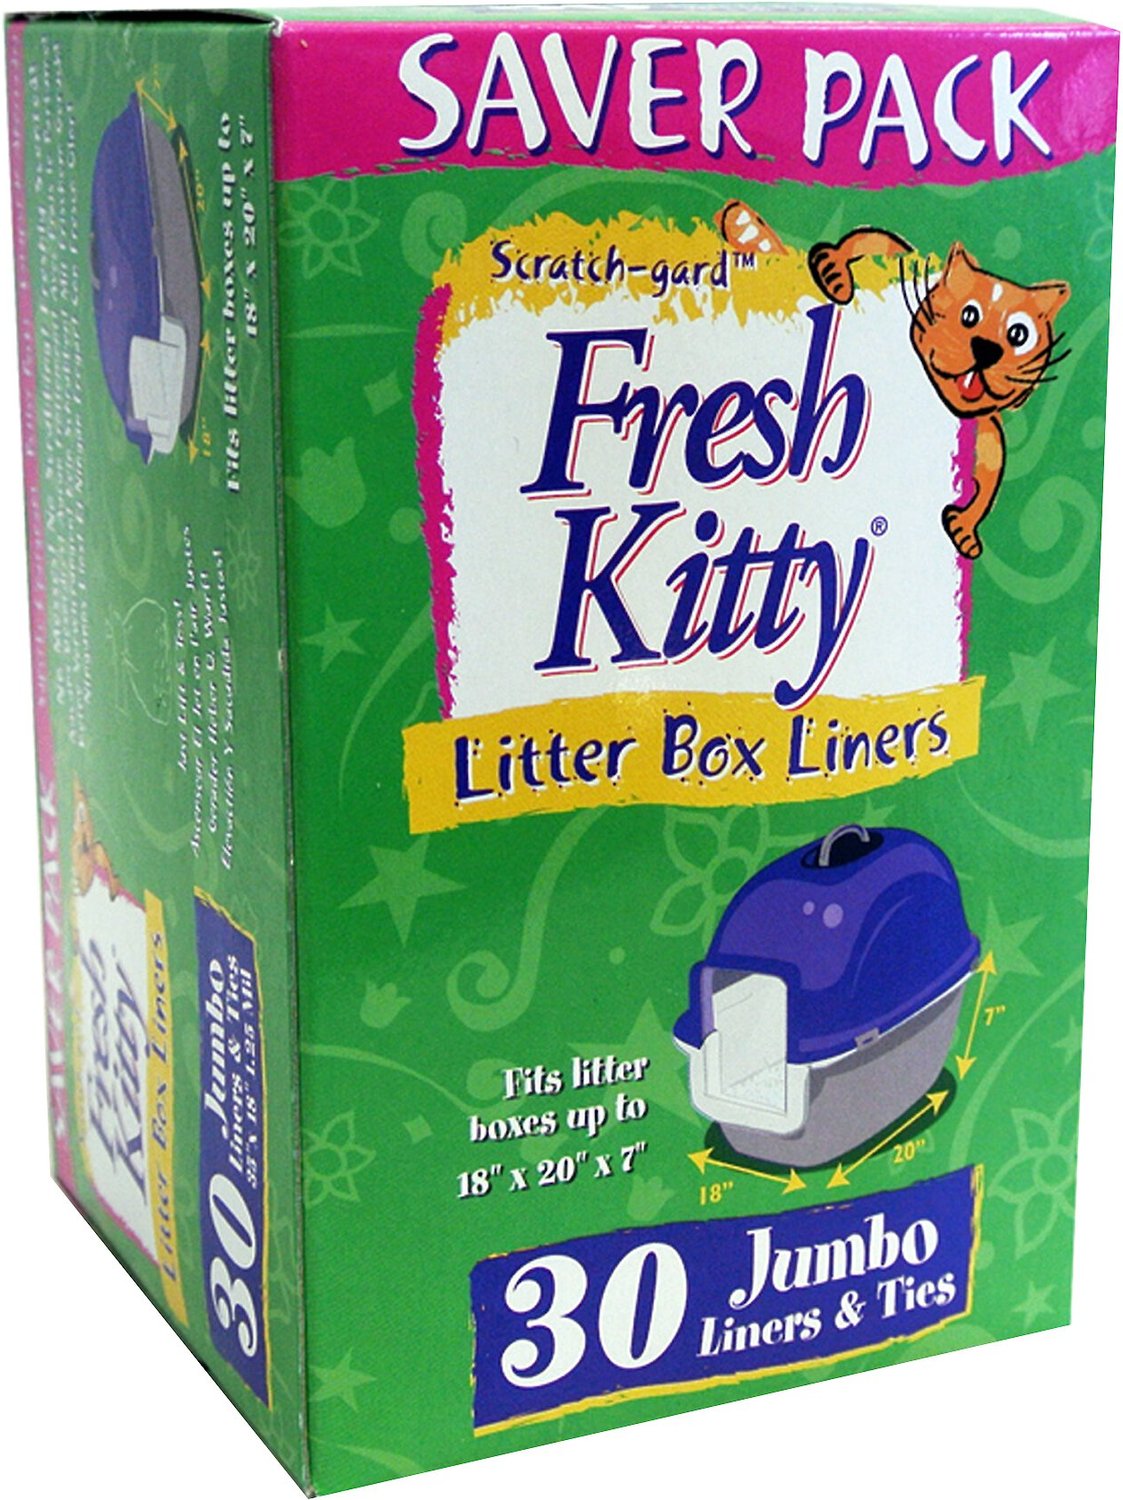 FRESH KITTY Jumbo Litter Box Liners & Ties, 30 count